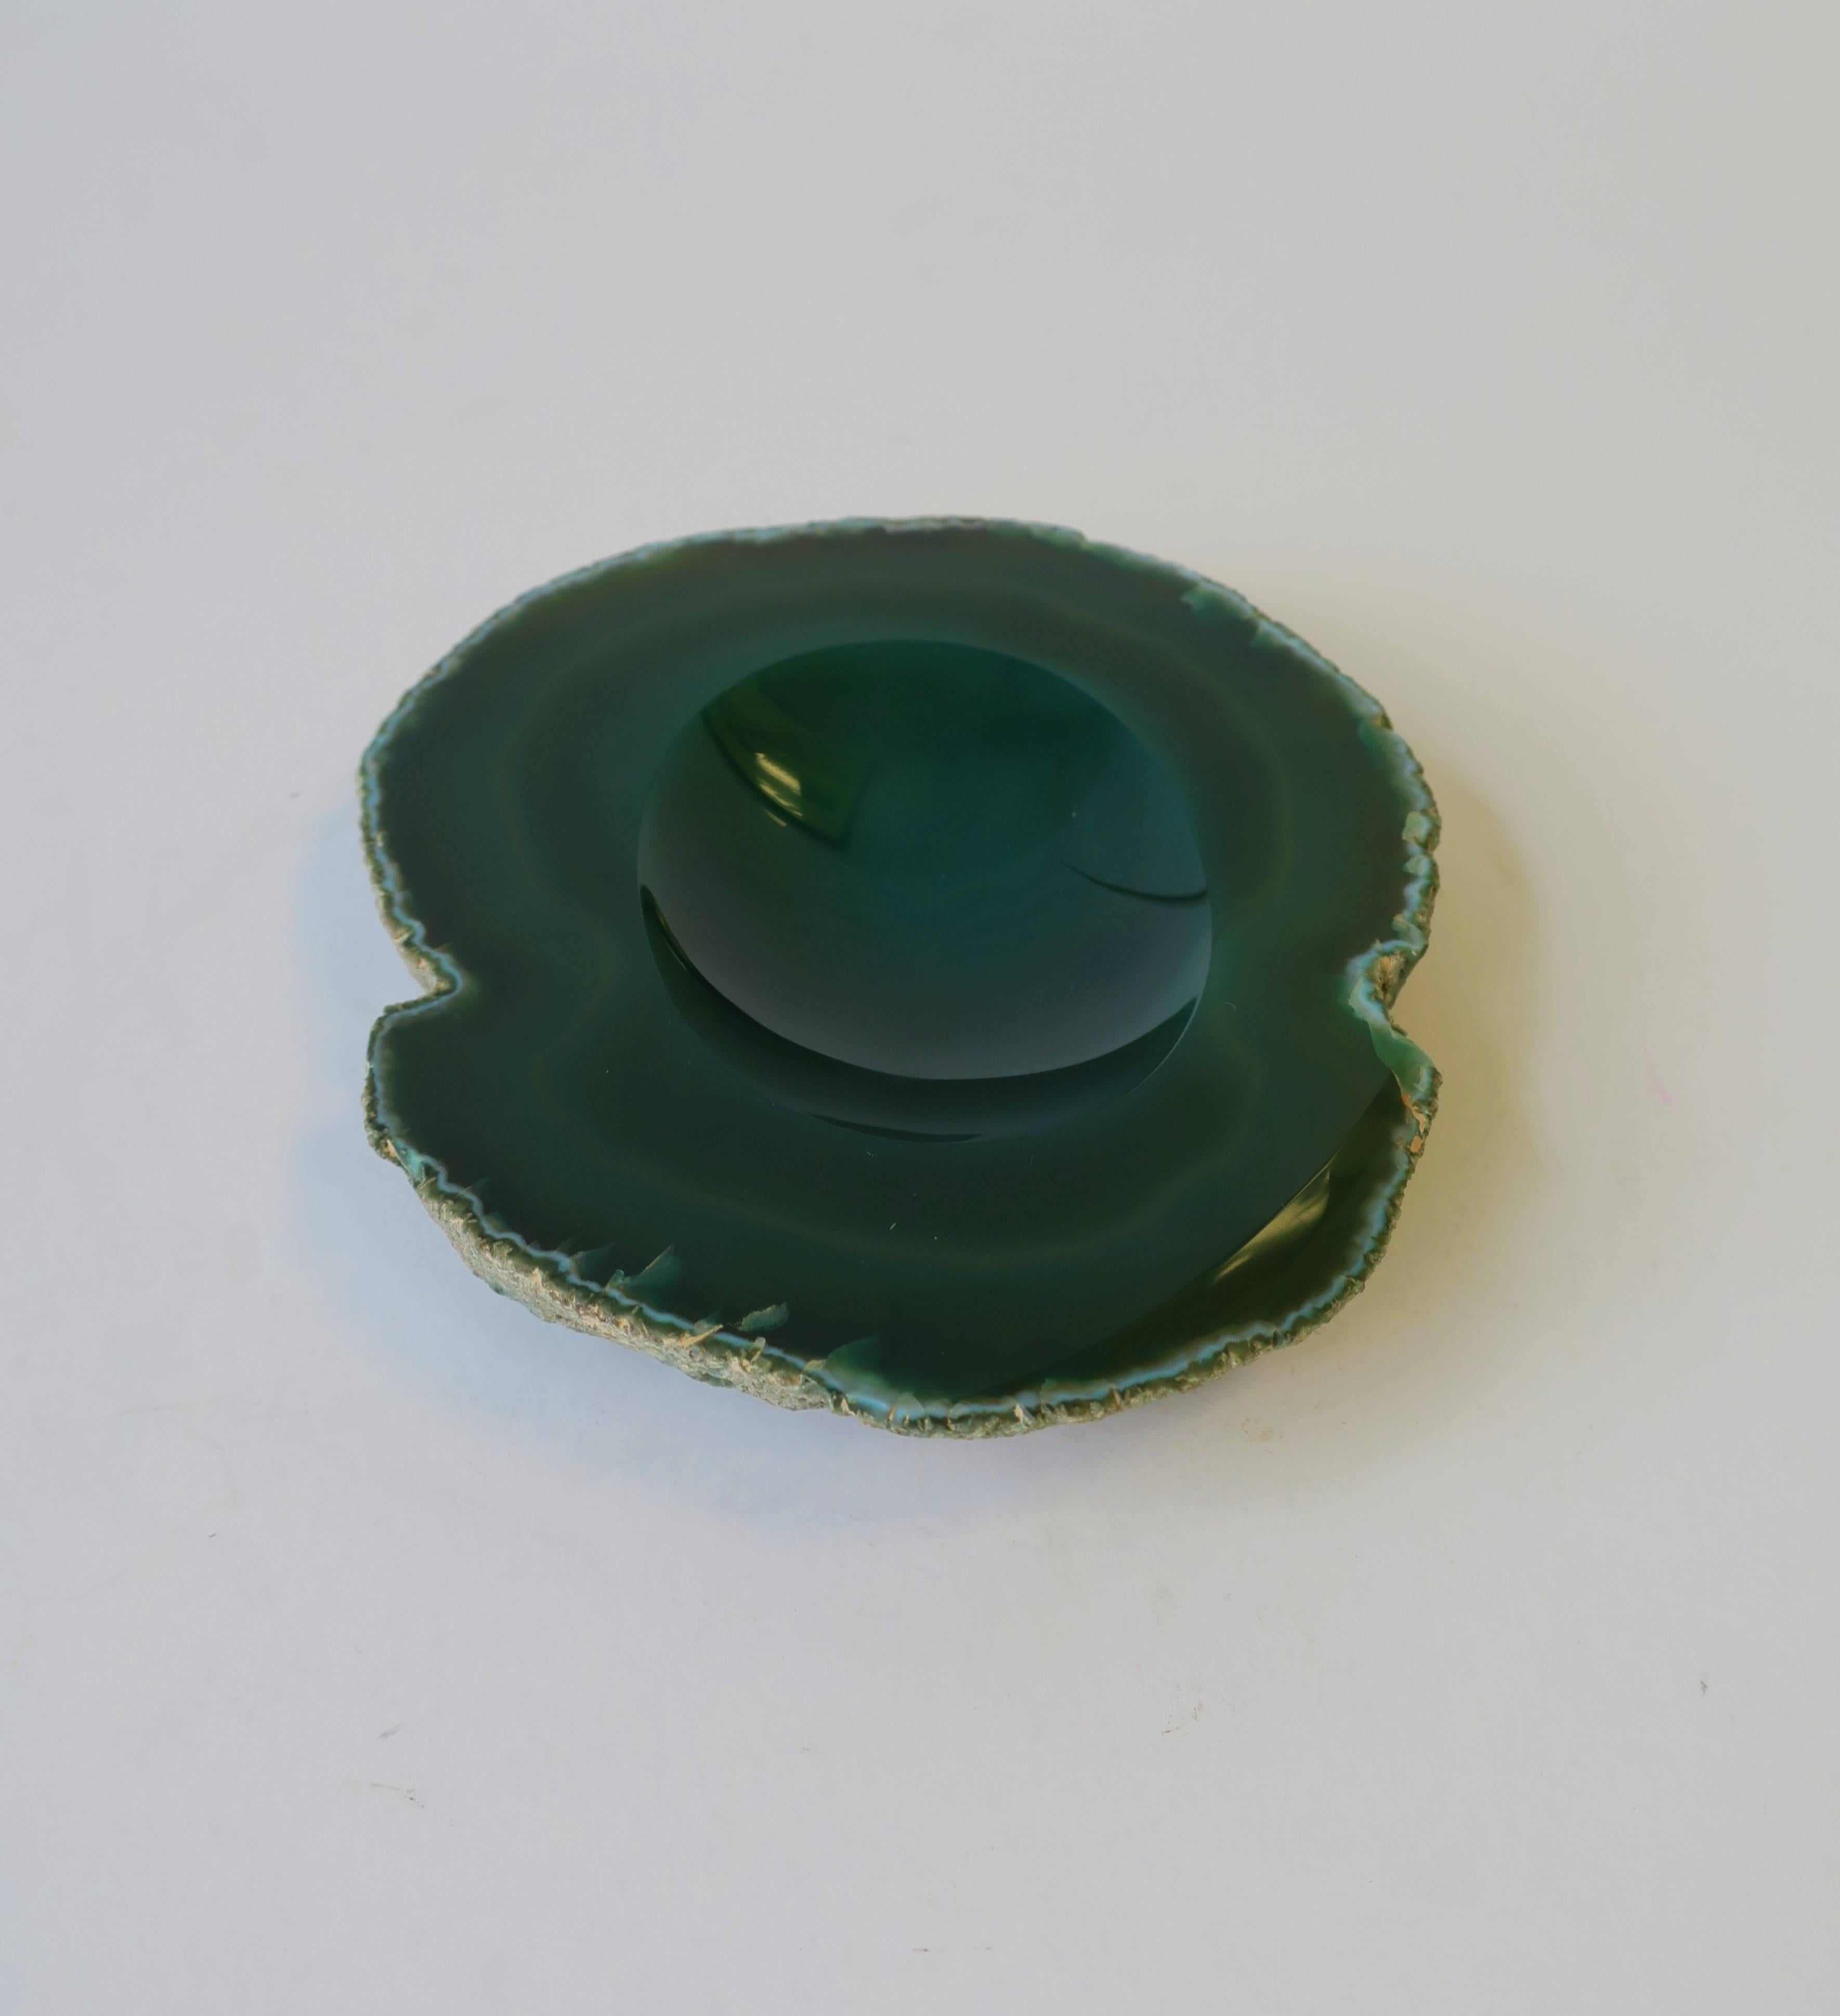 Vintage Emerald Green Agate Geode Vessel Bowl or Decorative Object 1